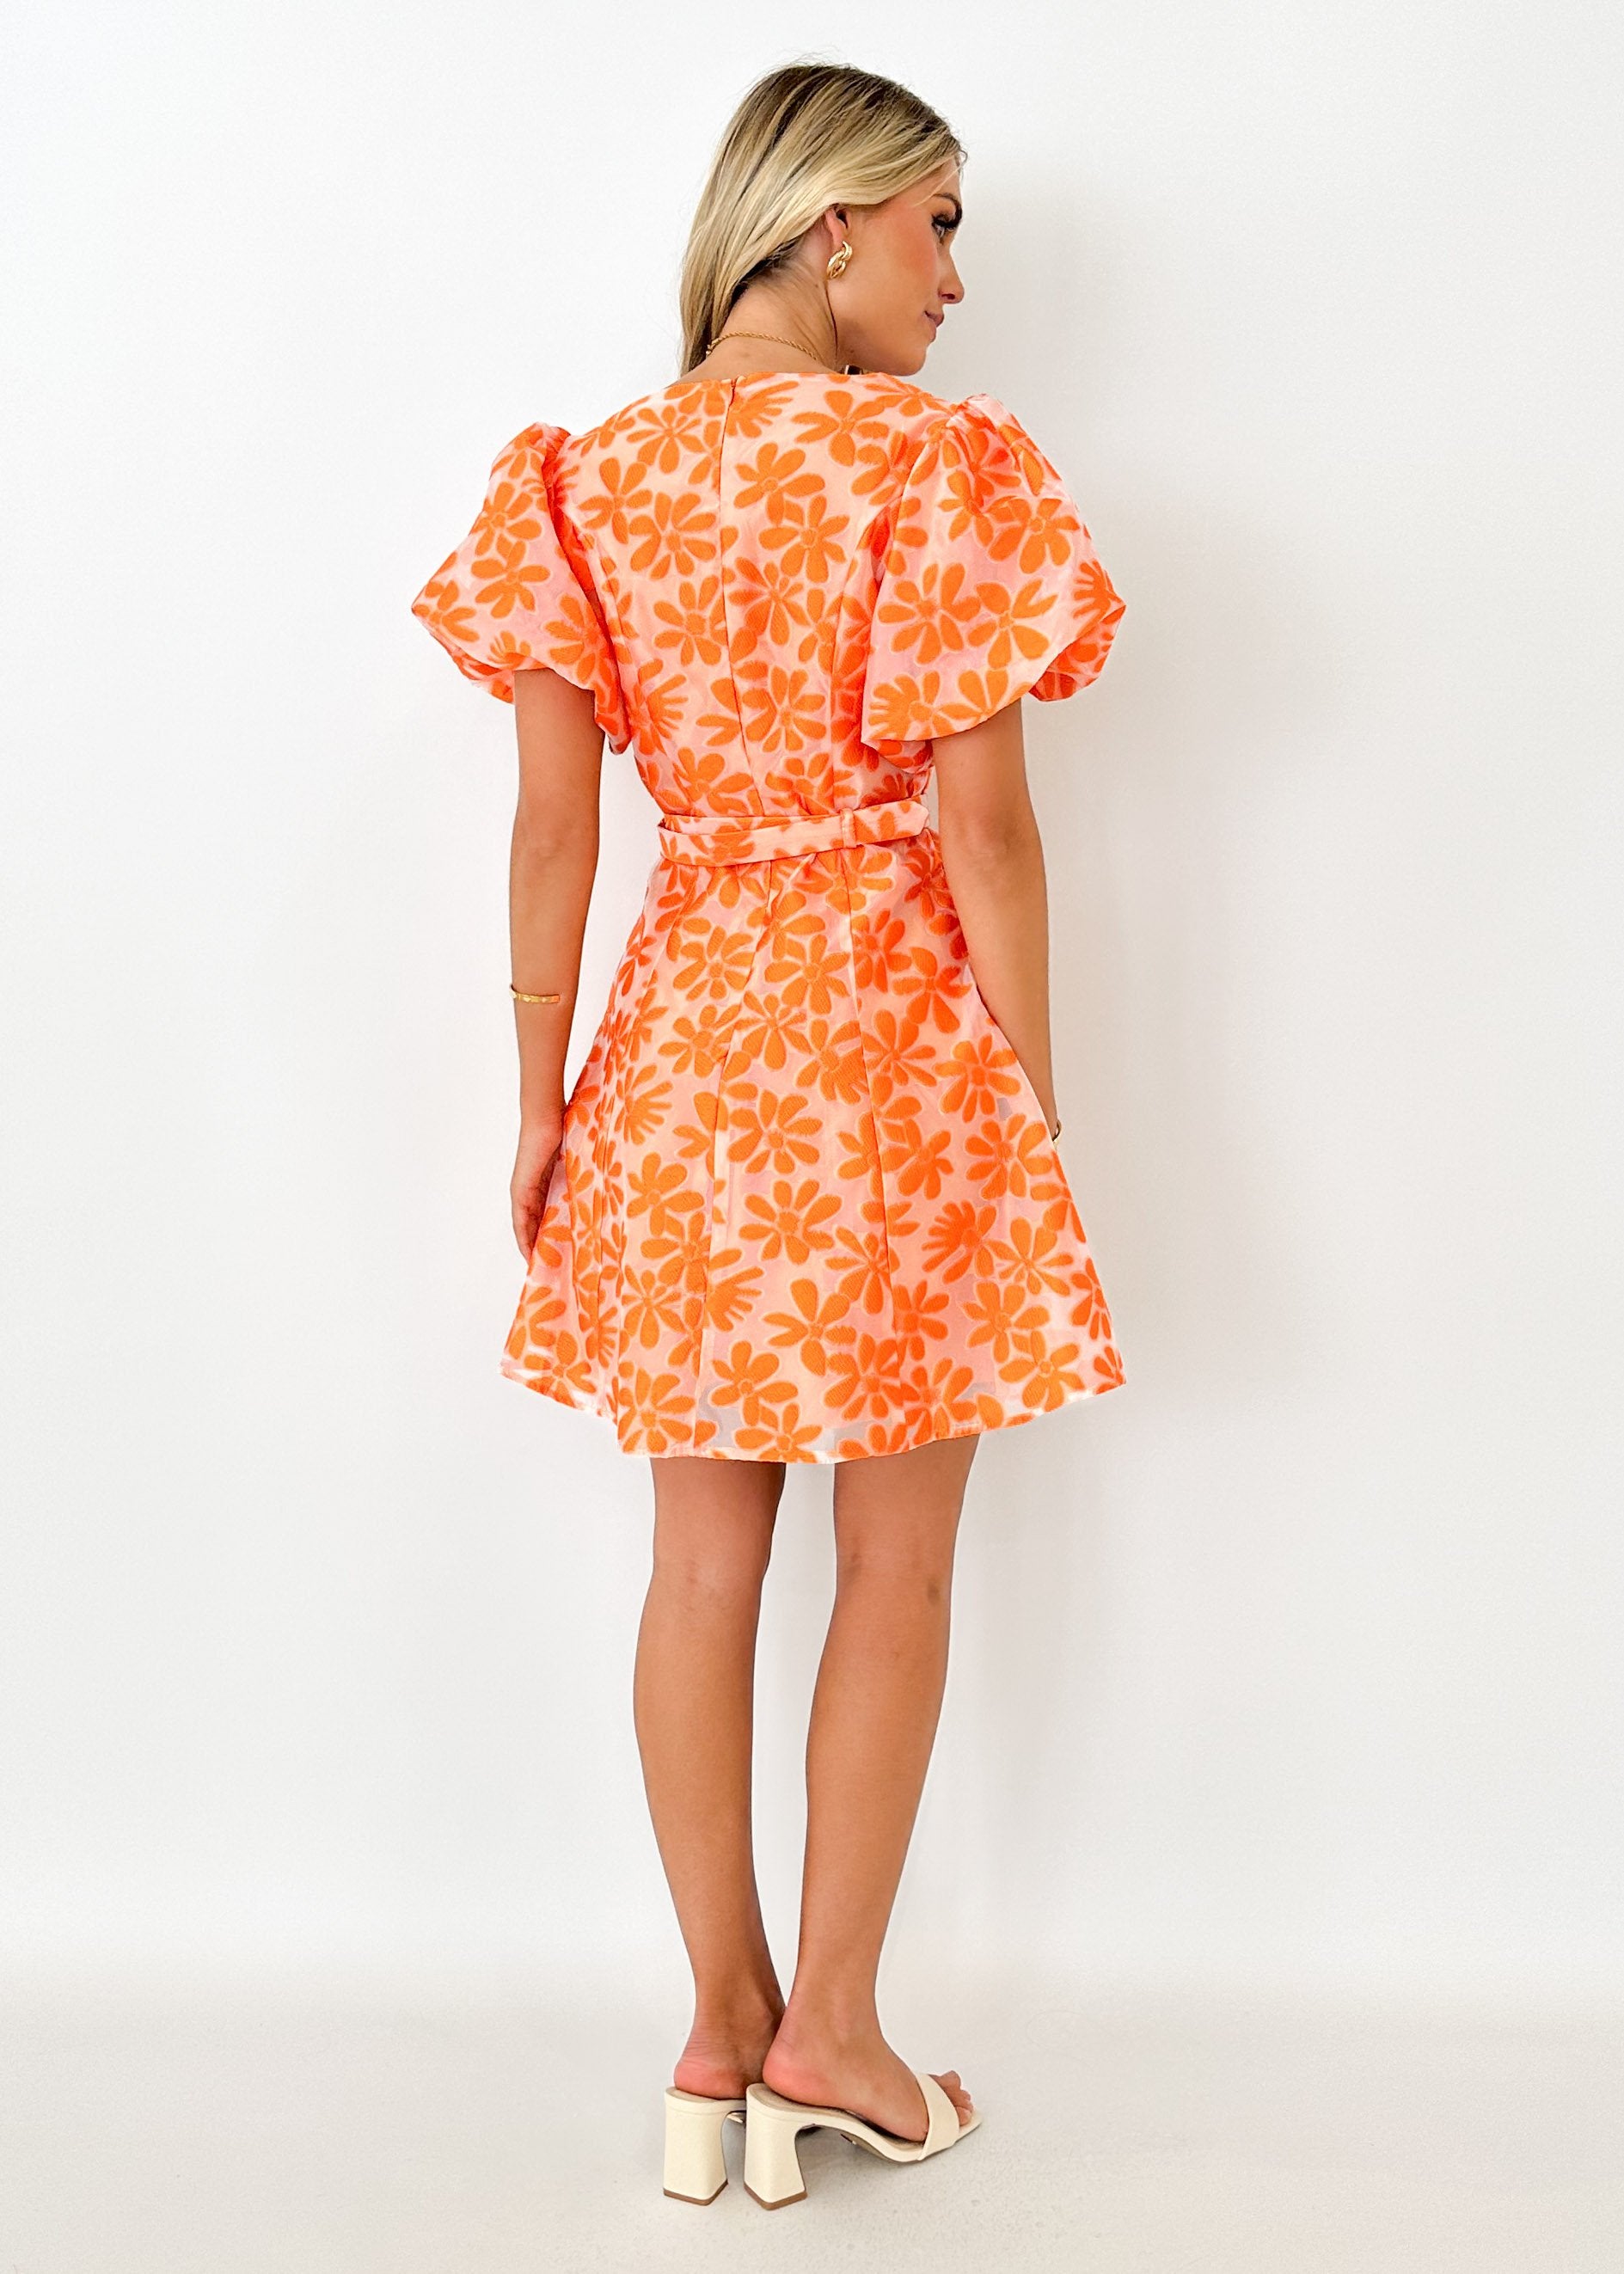 Jaylim Dress - Orange Flowers